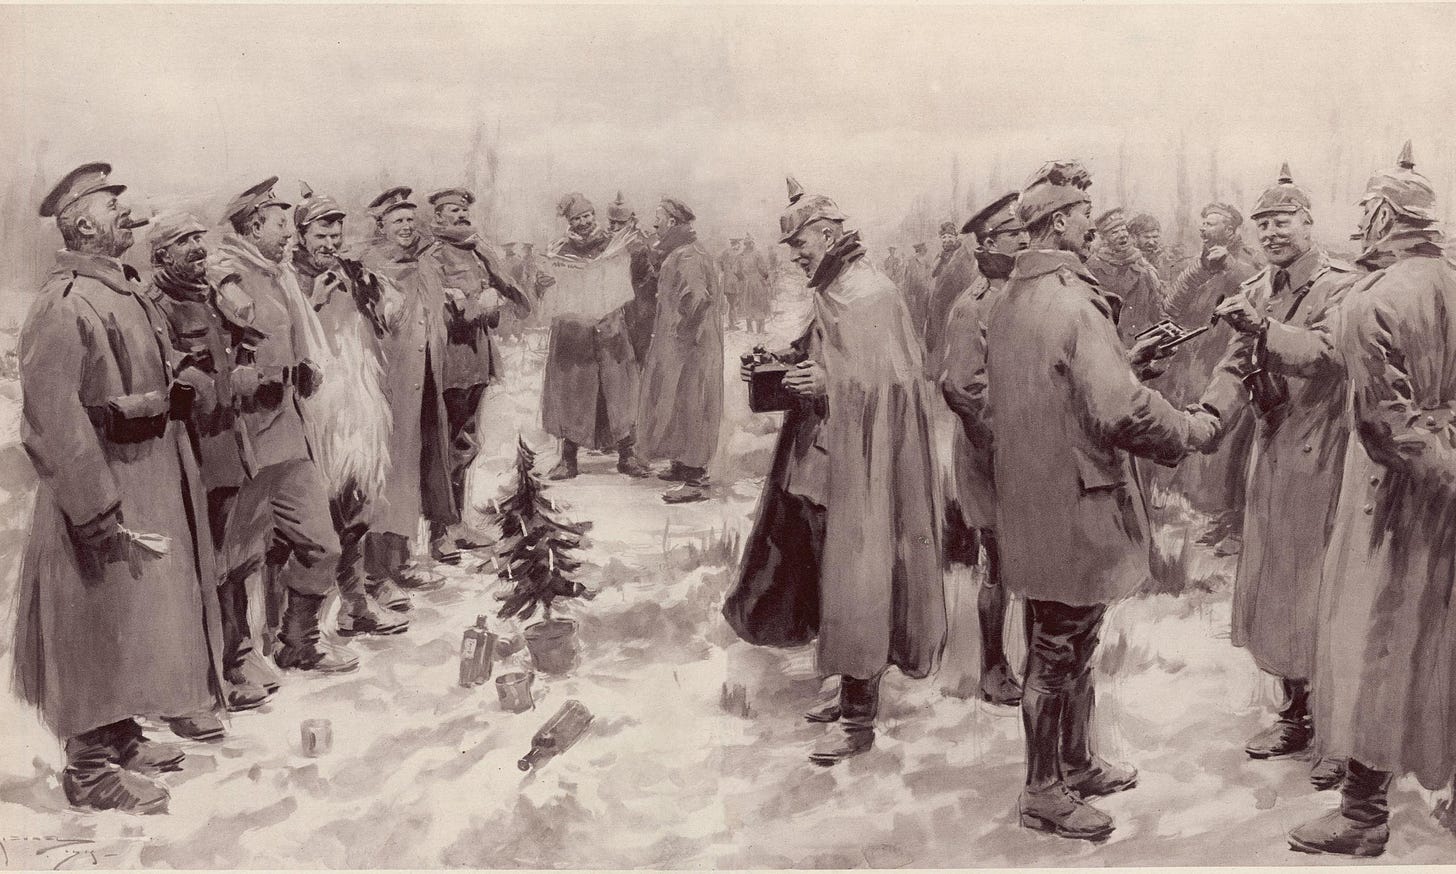 https://upload.wikimedia.org/wikipedia/en/4/42/Illustrated_London_News_-_Christmas_Truce_1914.jpg